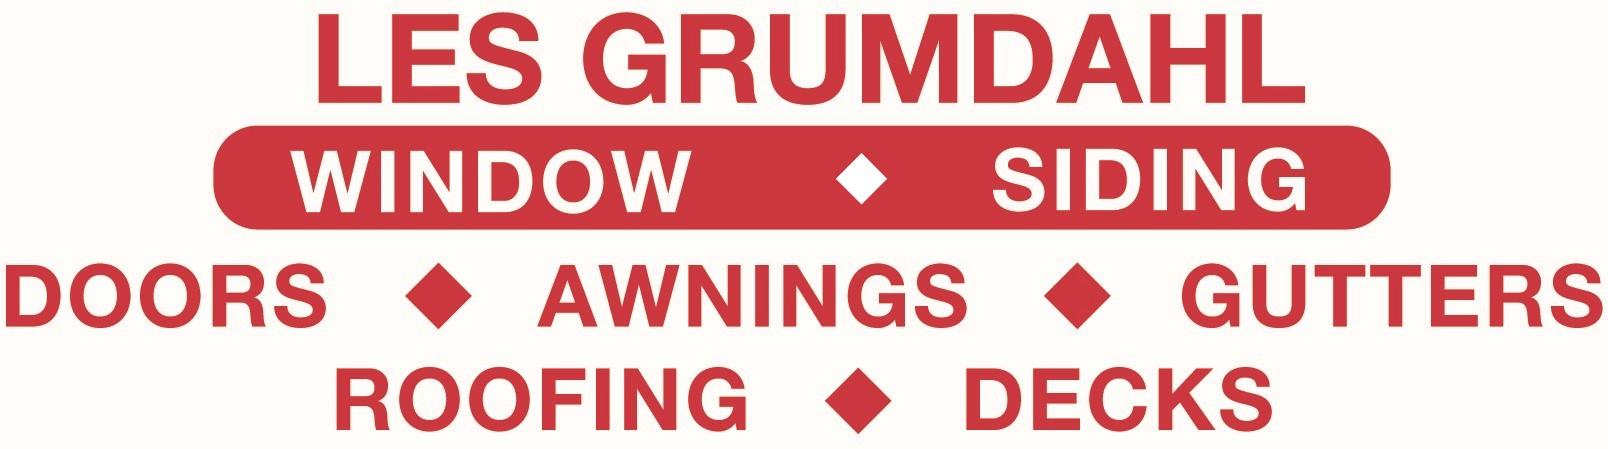 Les Grumdahl Window & Siding - Logo